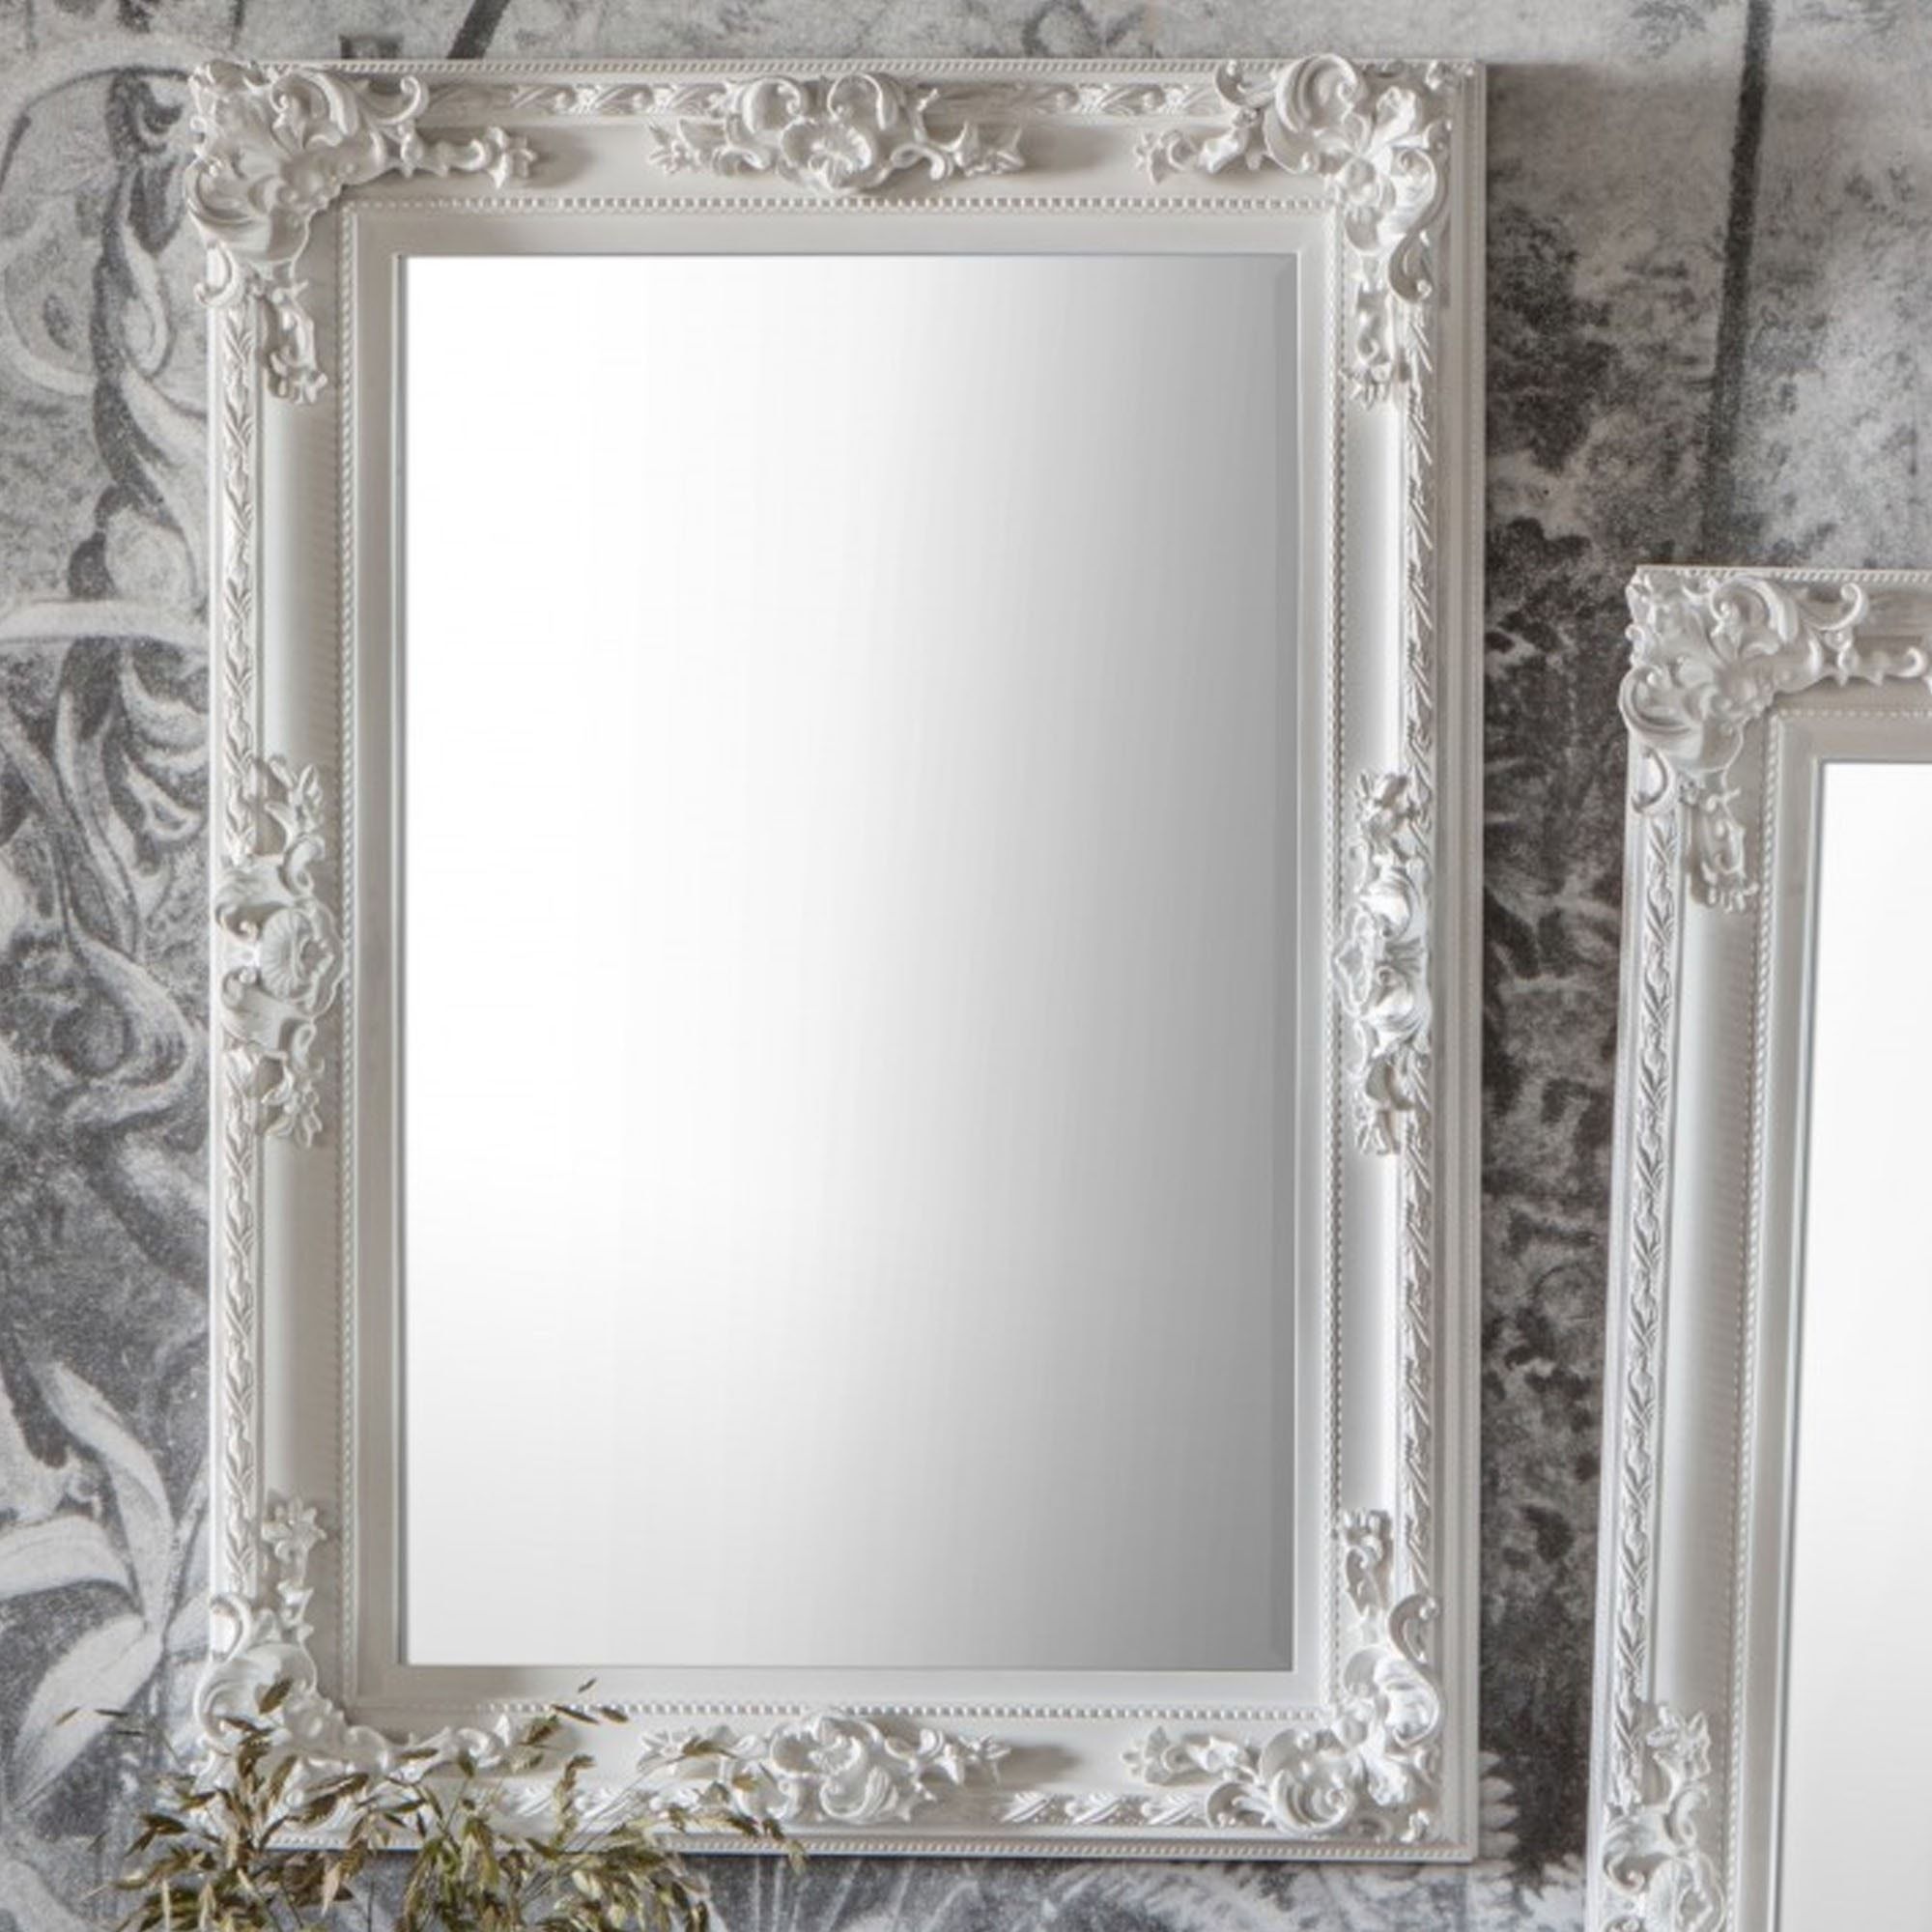 Altori Antique French Style Rectangle Mirror White | Ornate Mirror Throughout Natural Iron Rectangular Wall Mirrors (View 13 of 15)